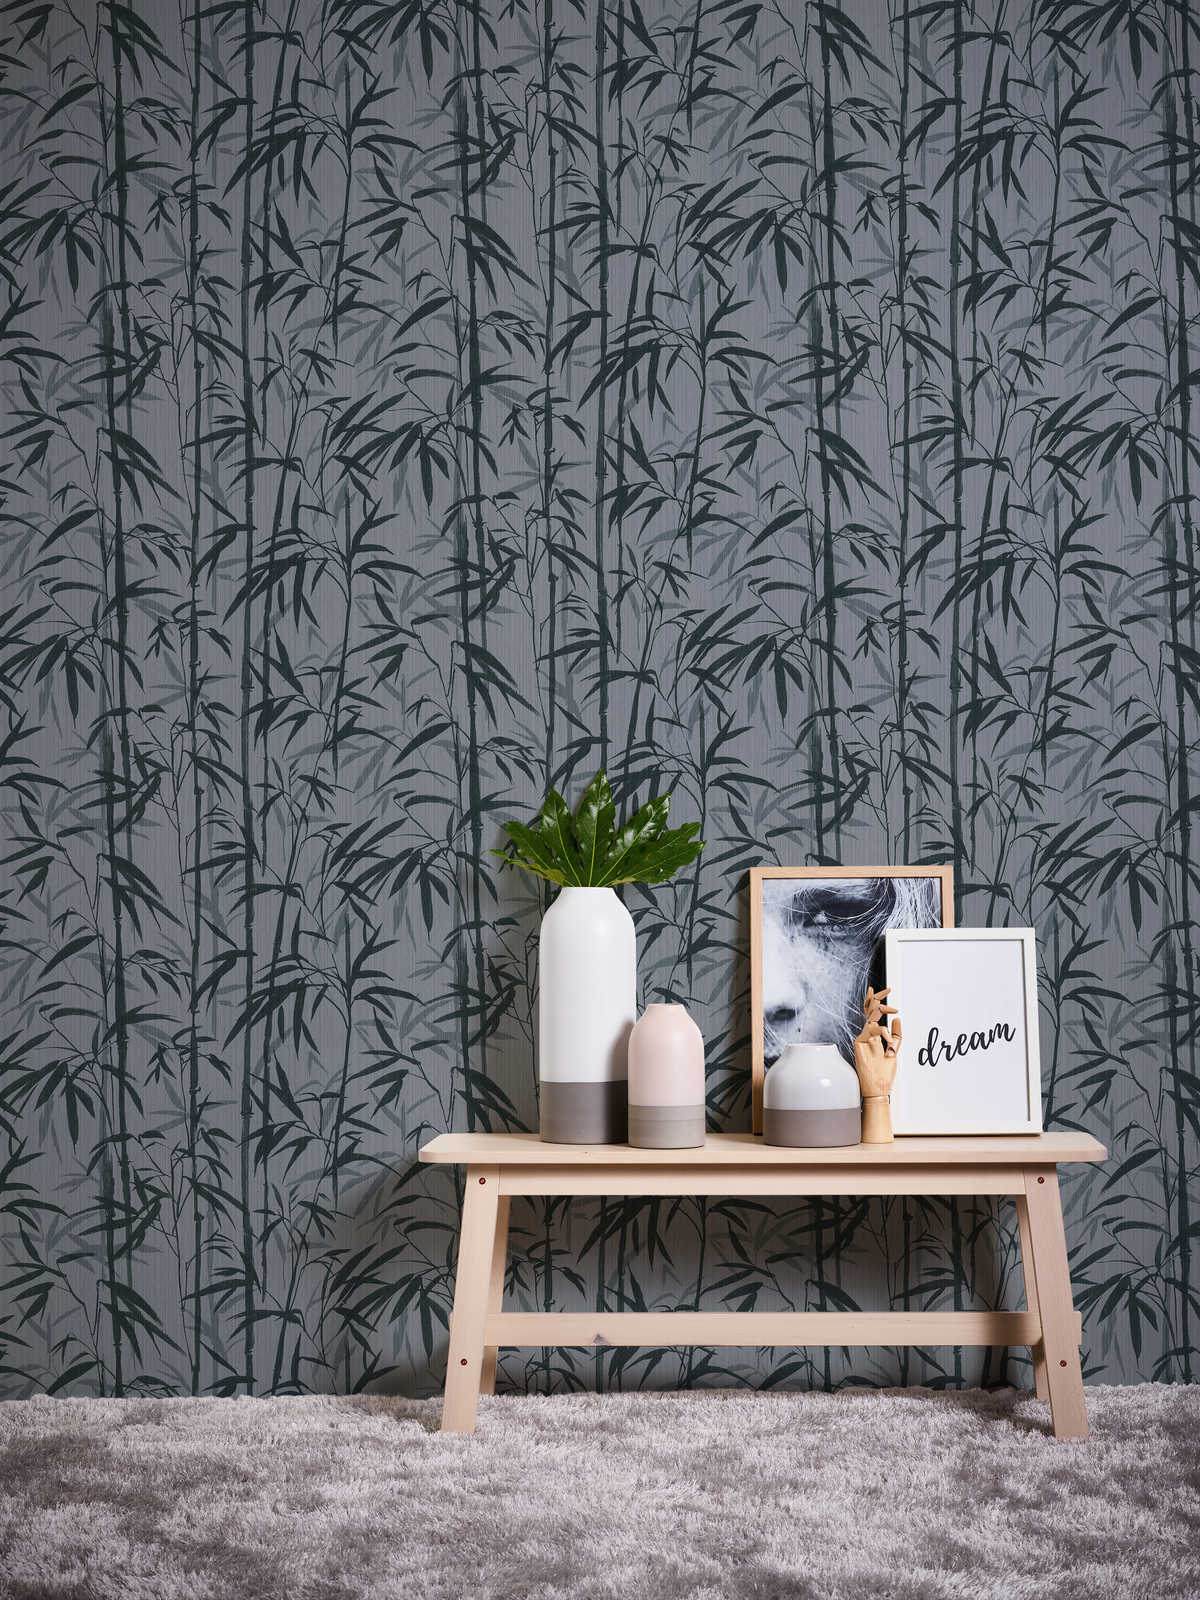             MICHALSKY non-woven wallpaper natural bamboo pattern - grey, black
        